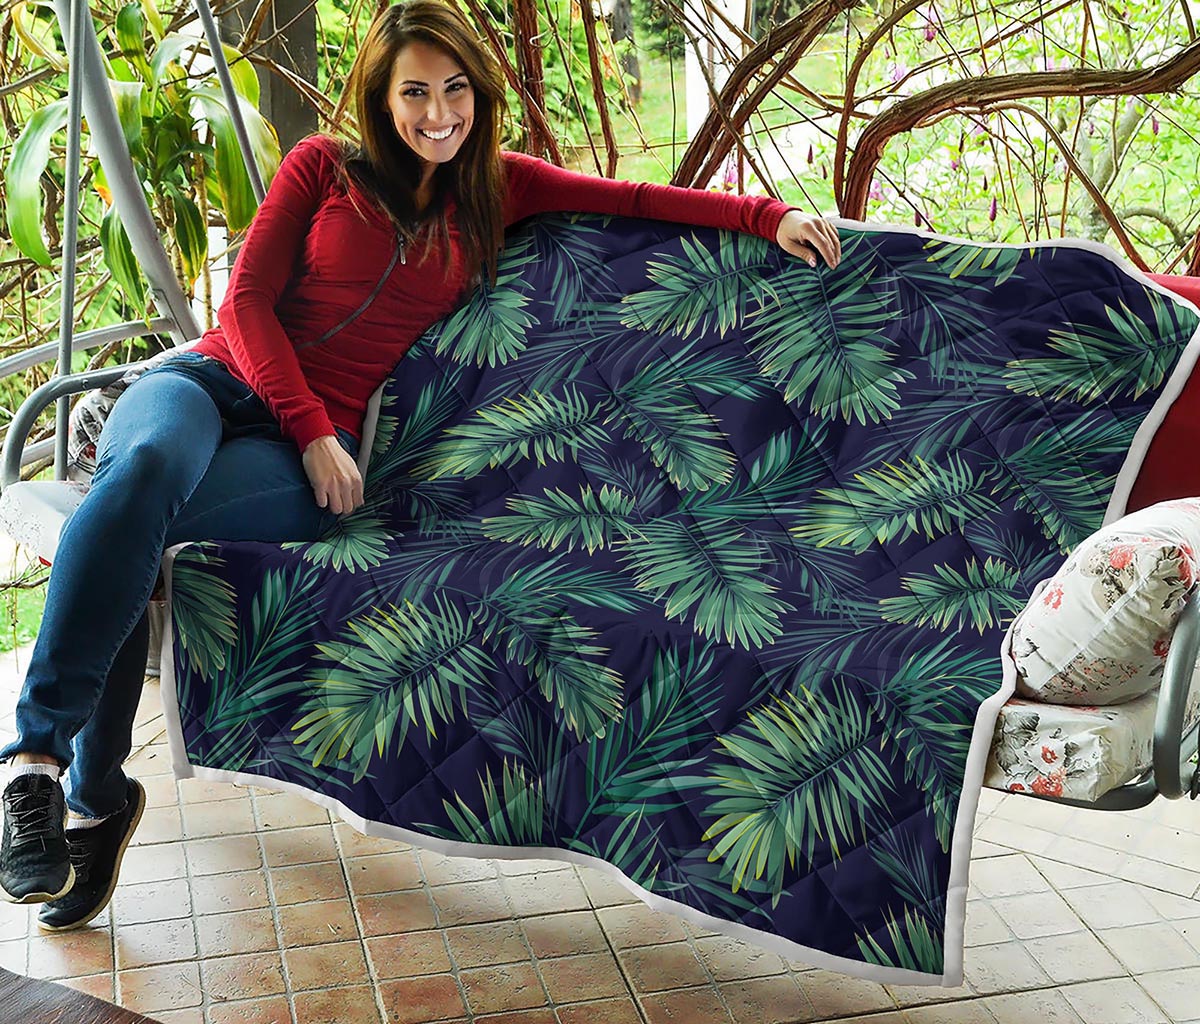 Dark Tropical Palm Leaf Pattern Print Quilt